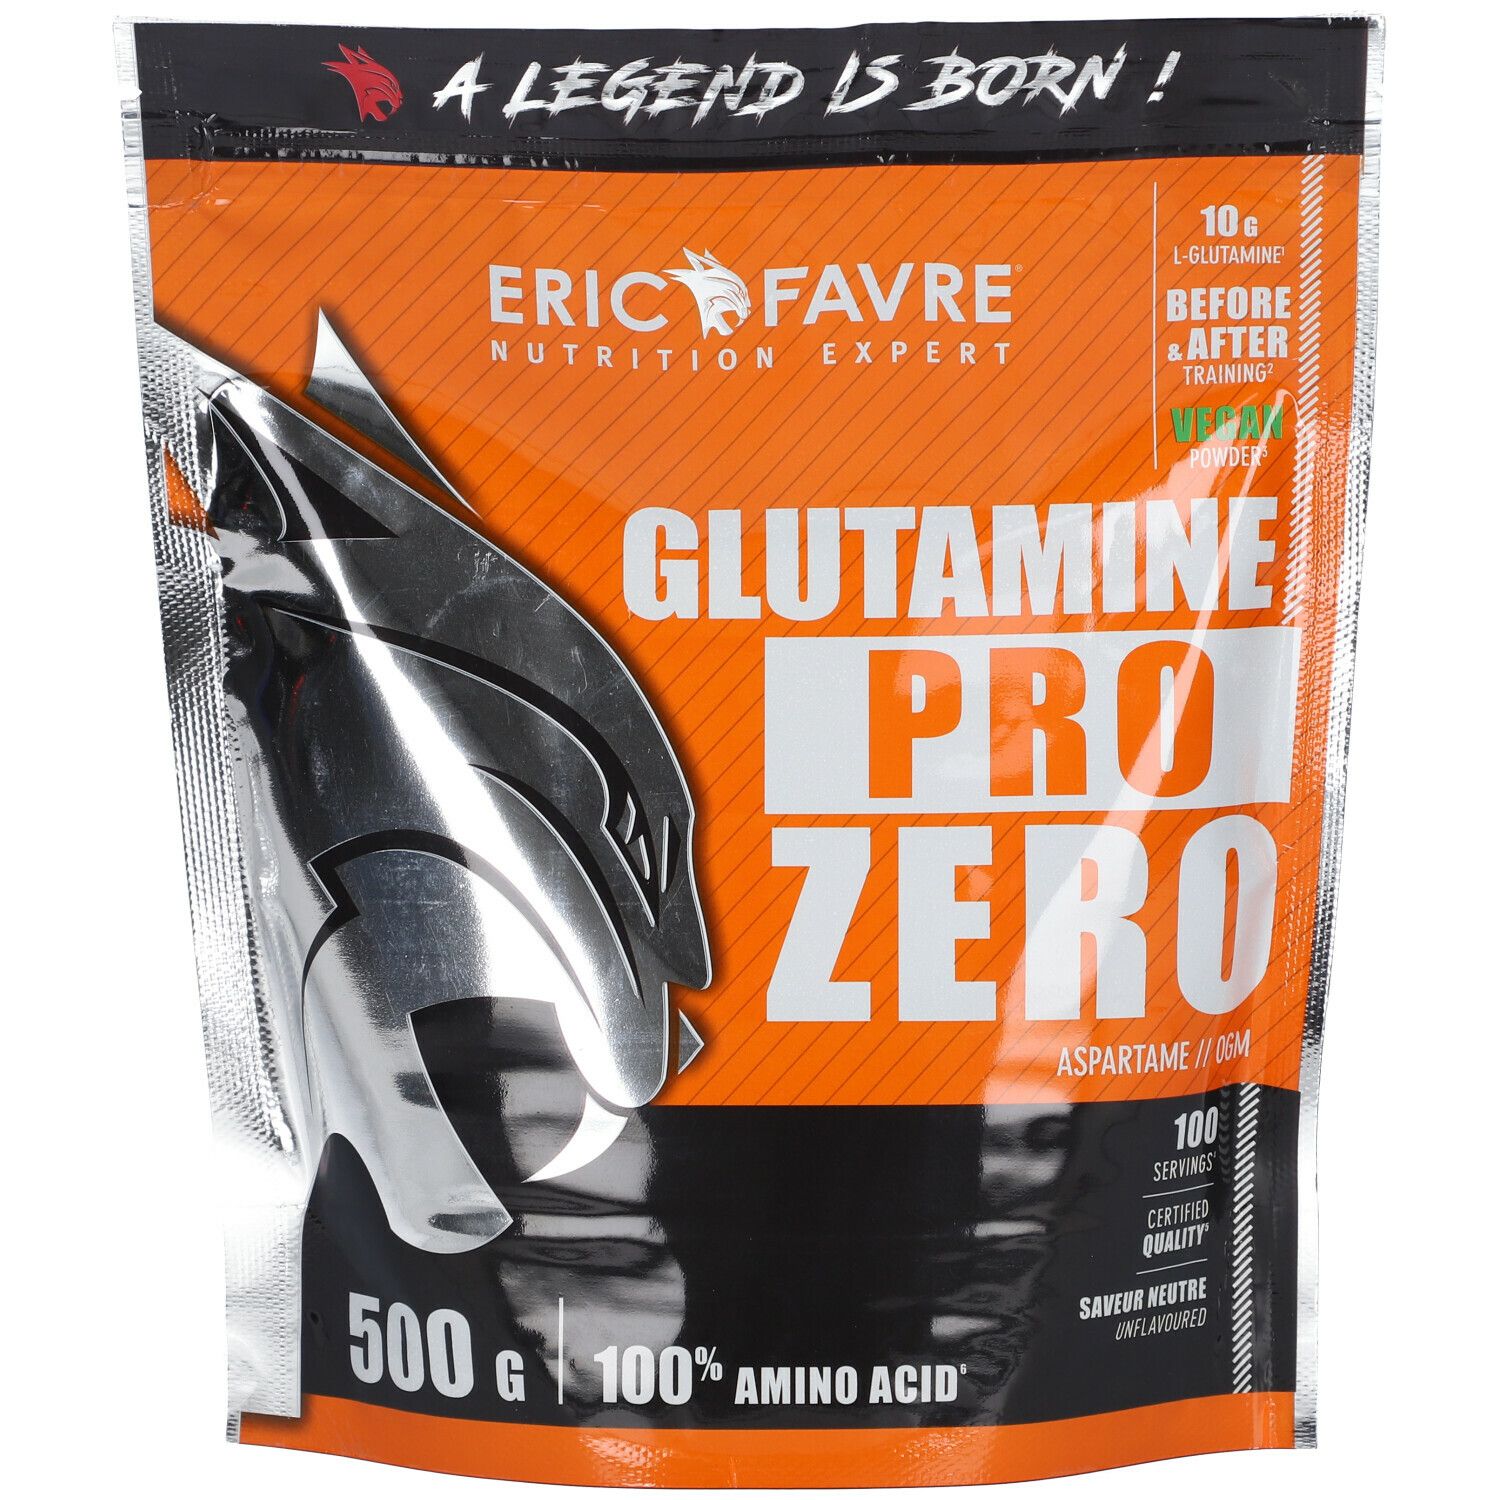 Eric Favre® Glutamine Pro Zero